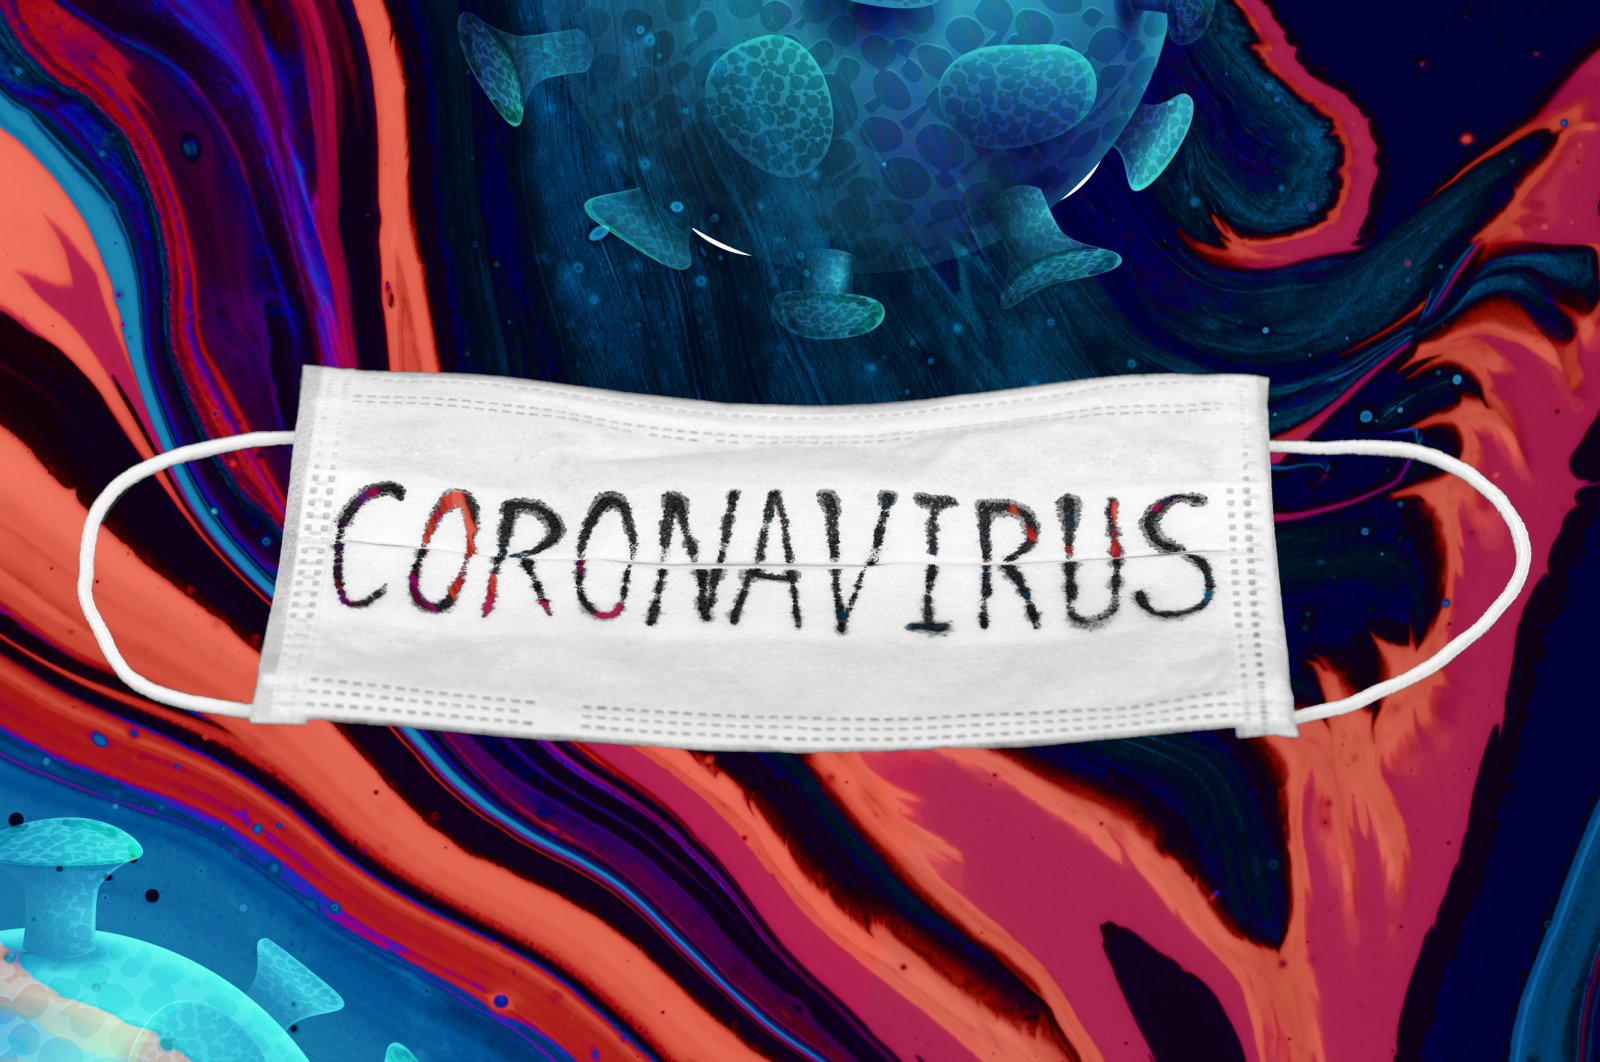 The illustration shows a mask with coronavirus written across it. (Illustration by Büşra Öztürk)